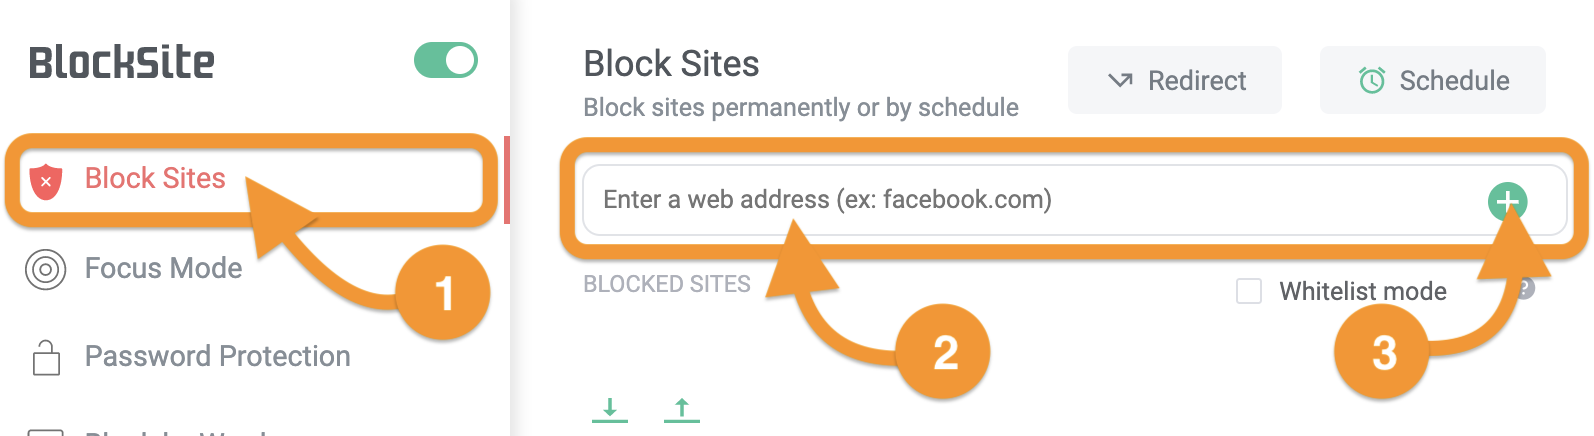 Adding more blocked sites